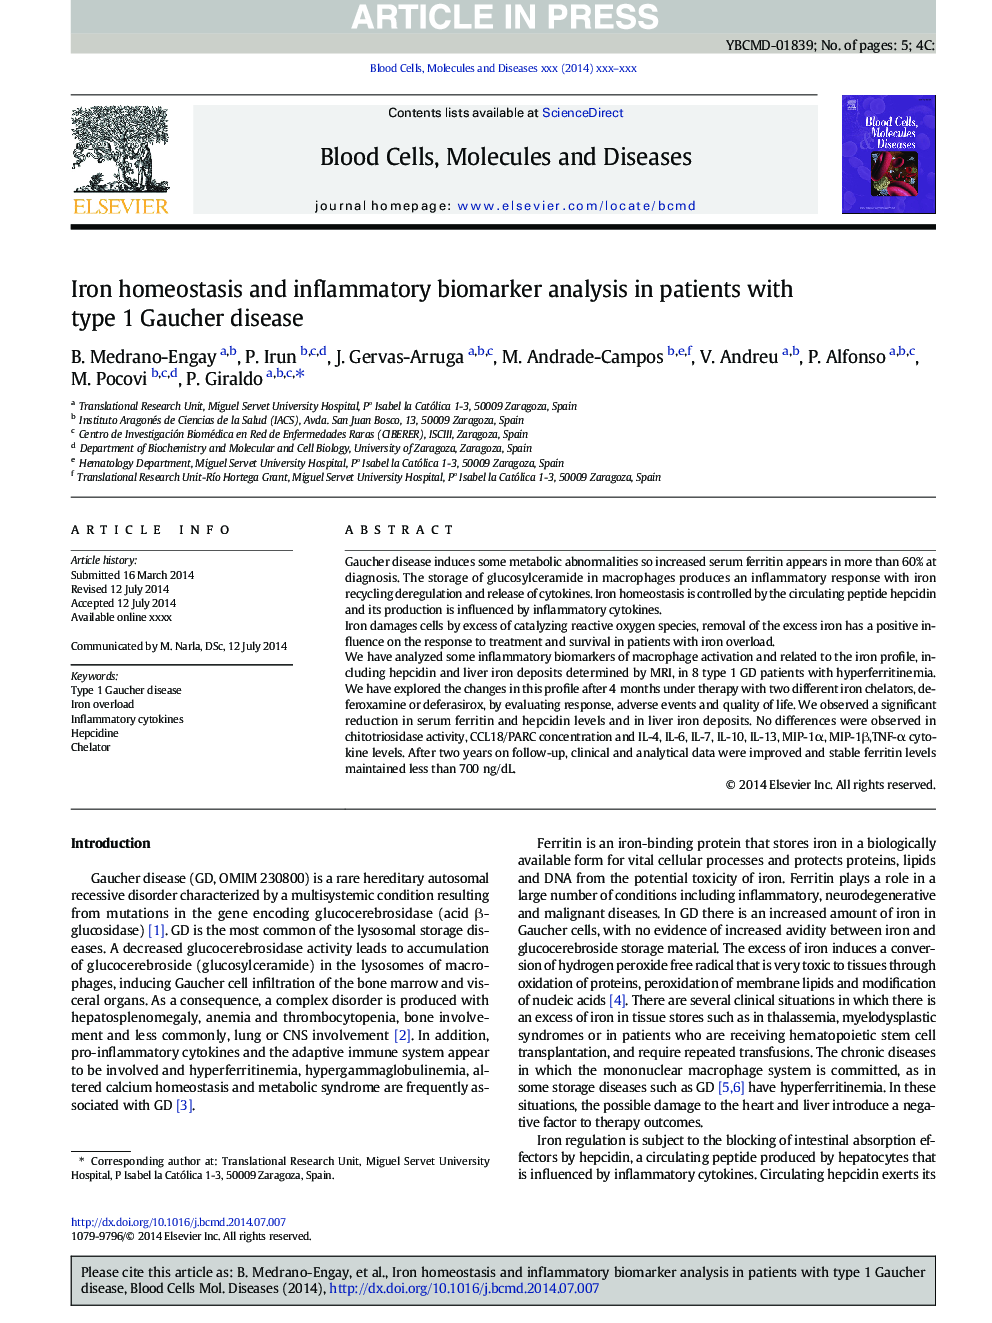 Iron homeostasis and infIammatory biomarker analysis in patients with type 1 Gaucher disease